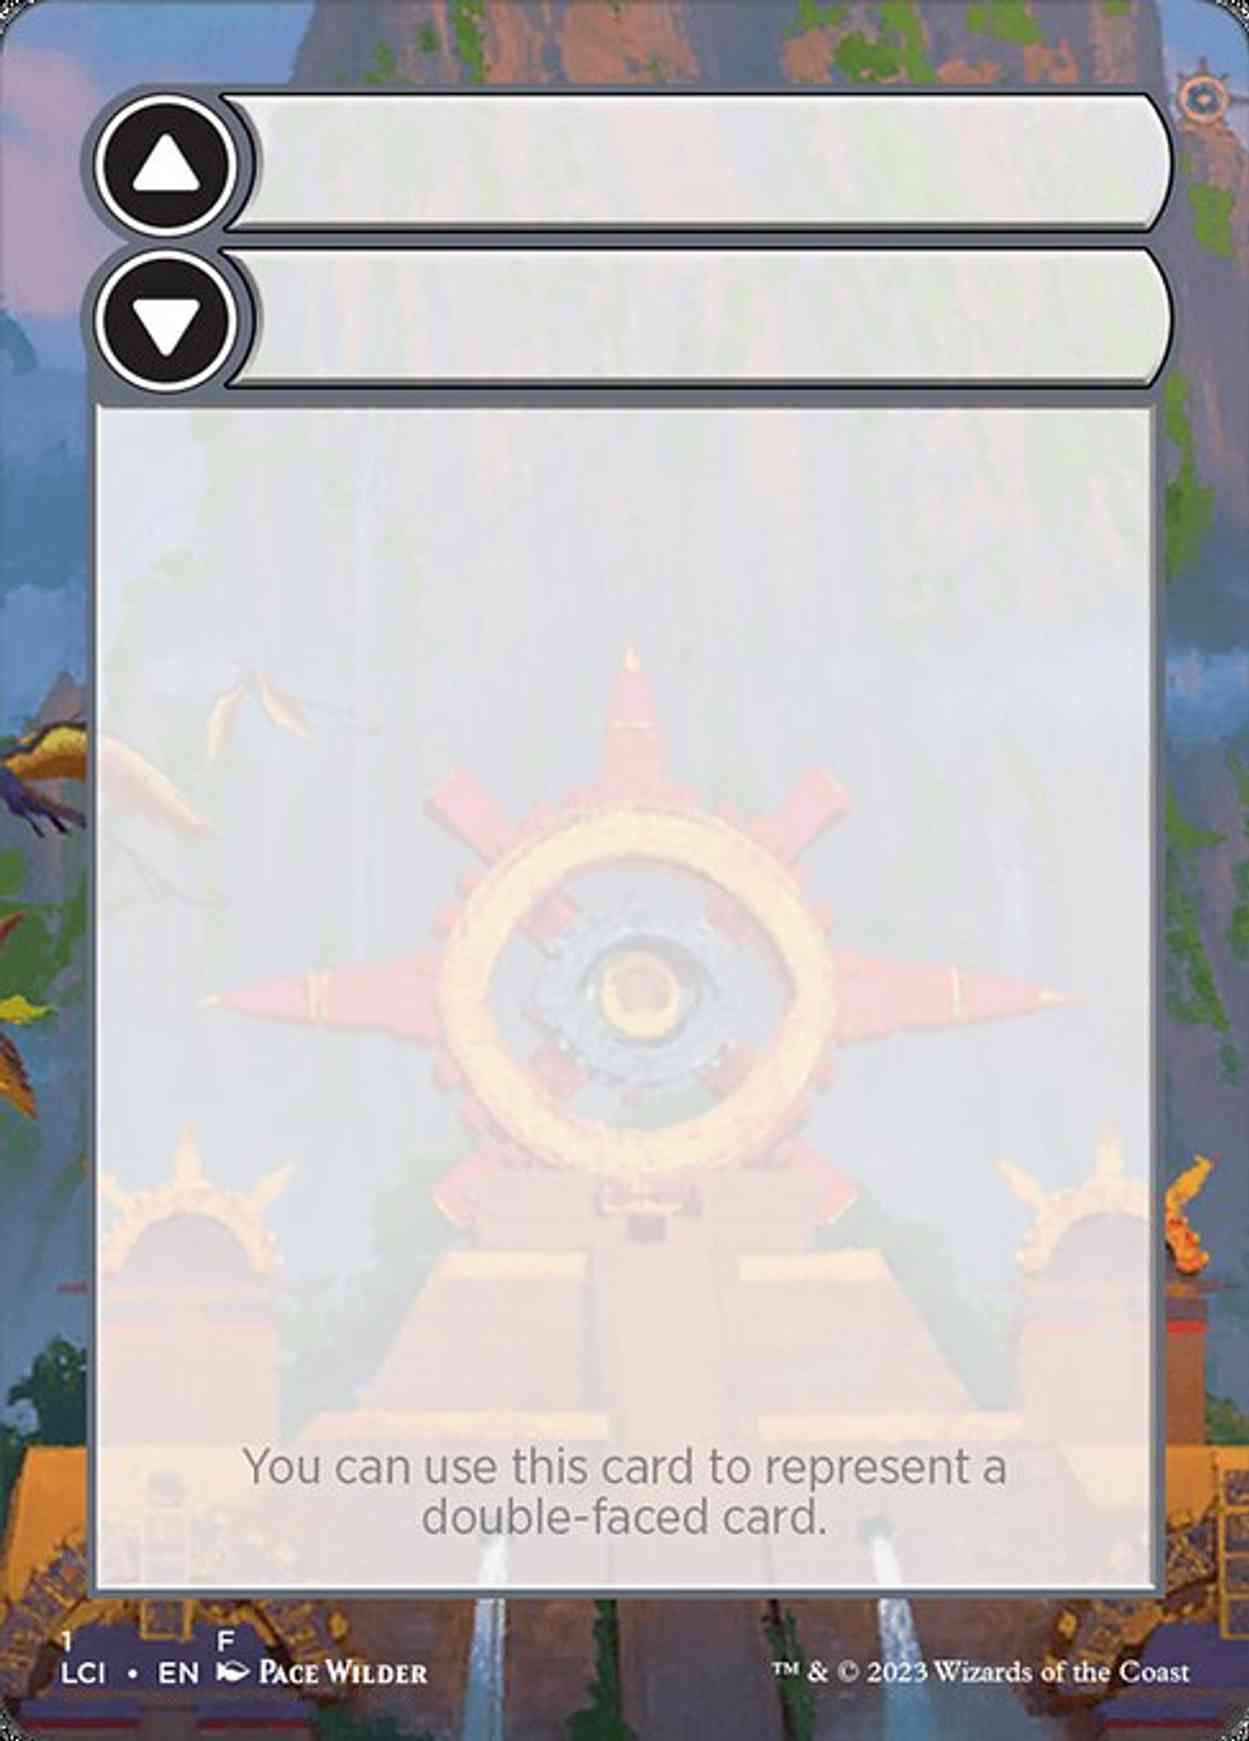 Helper Card magic card front